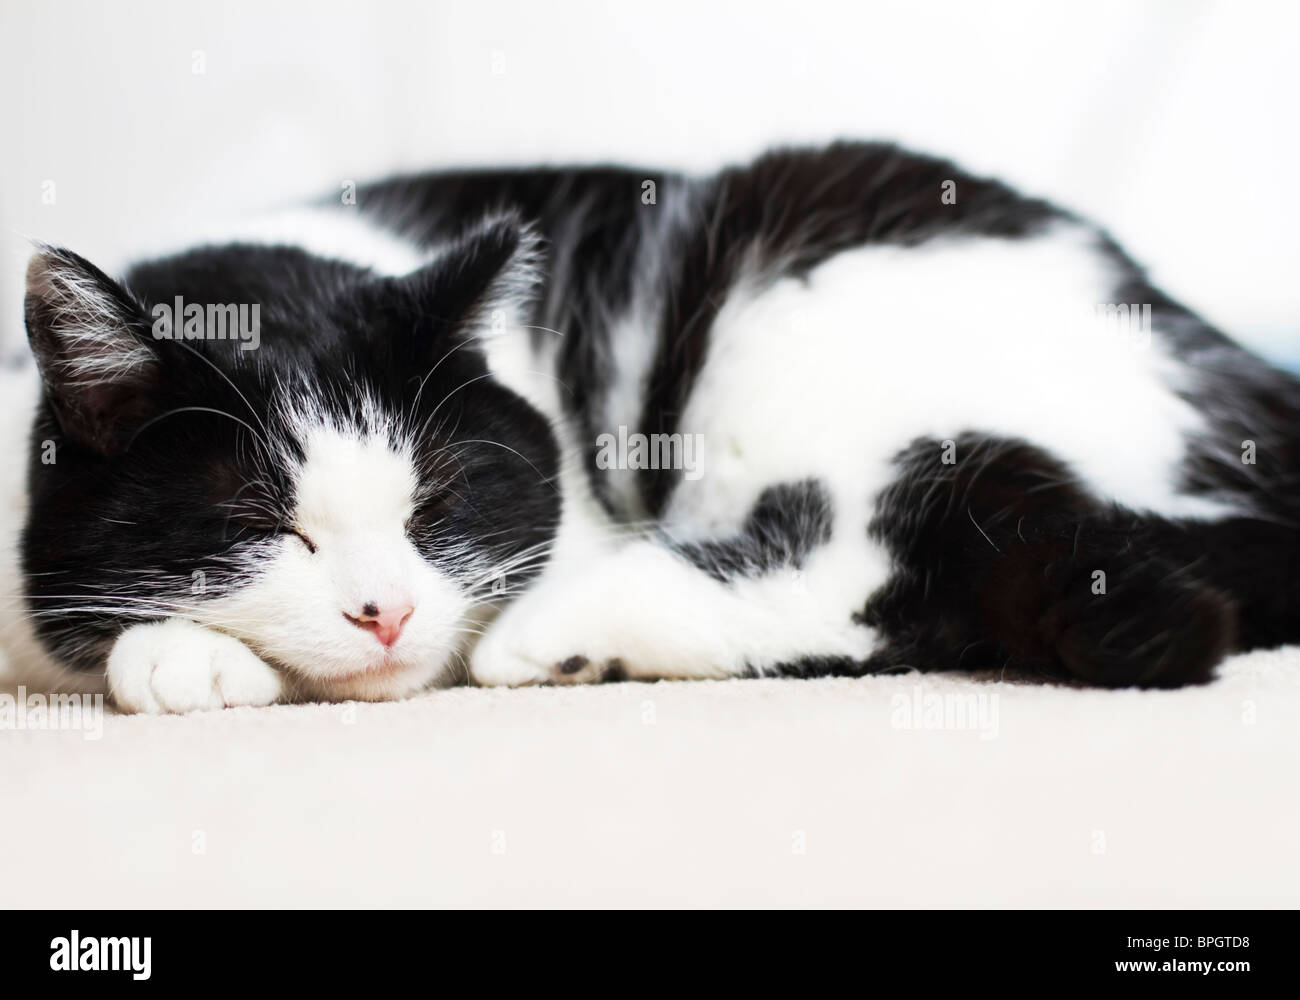 A sleepy, yet watchful cat Stock Photo